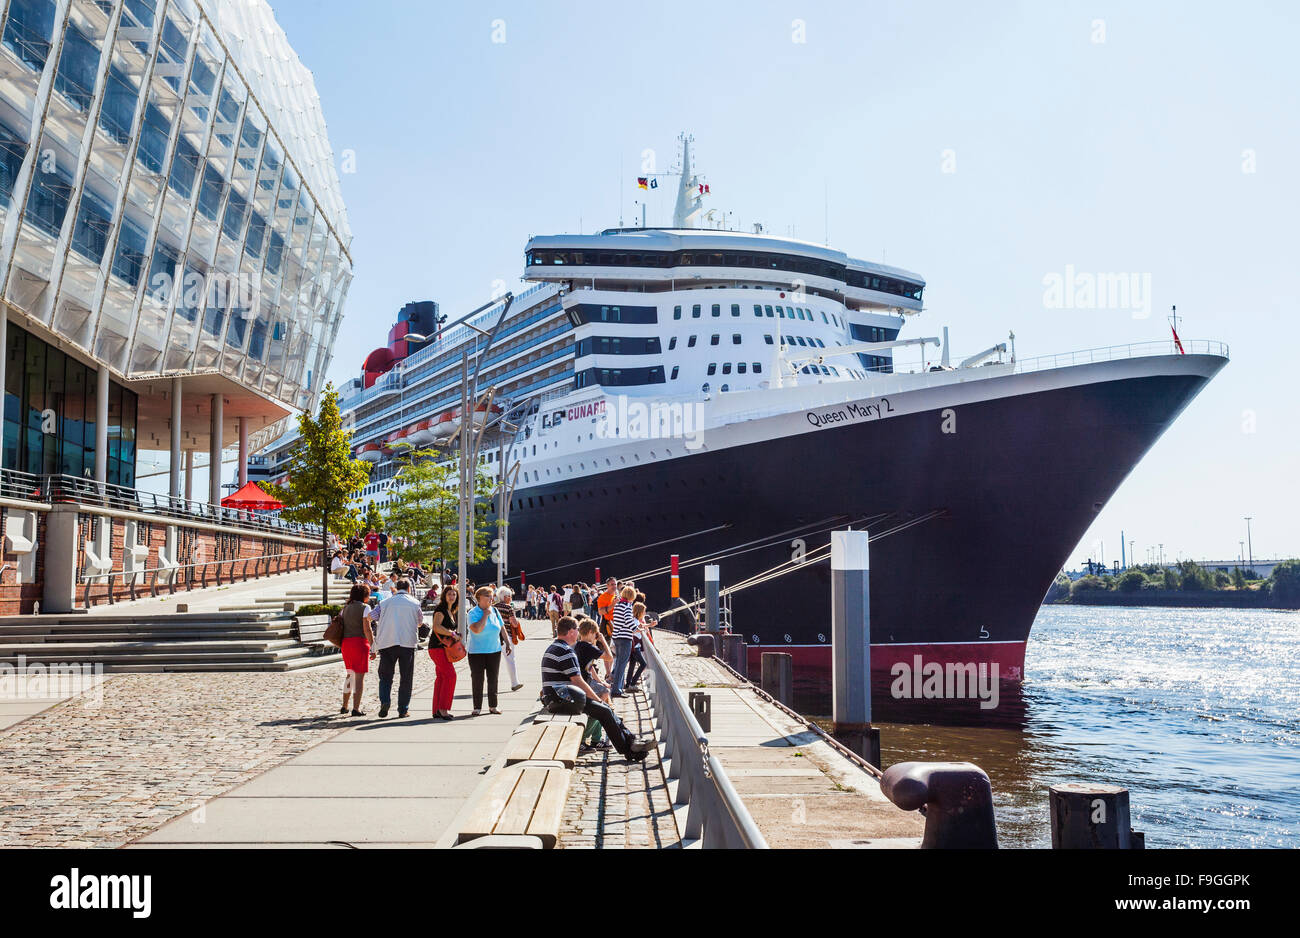 Germania, Città Libera e Anseatica di Amburgo, Strandkai a HafenCity, Cunard Liner Queen Mary II a Hamburg Cruise Center Foto Stock